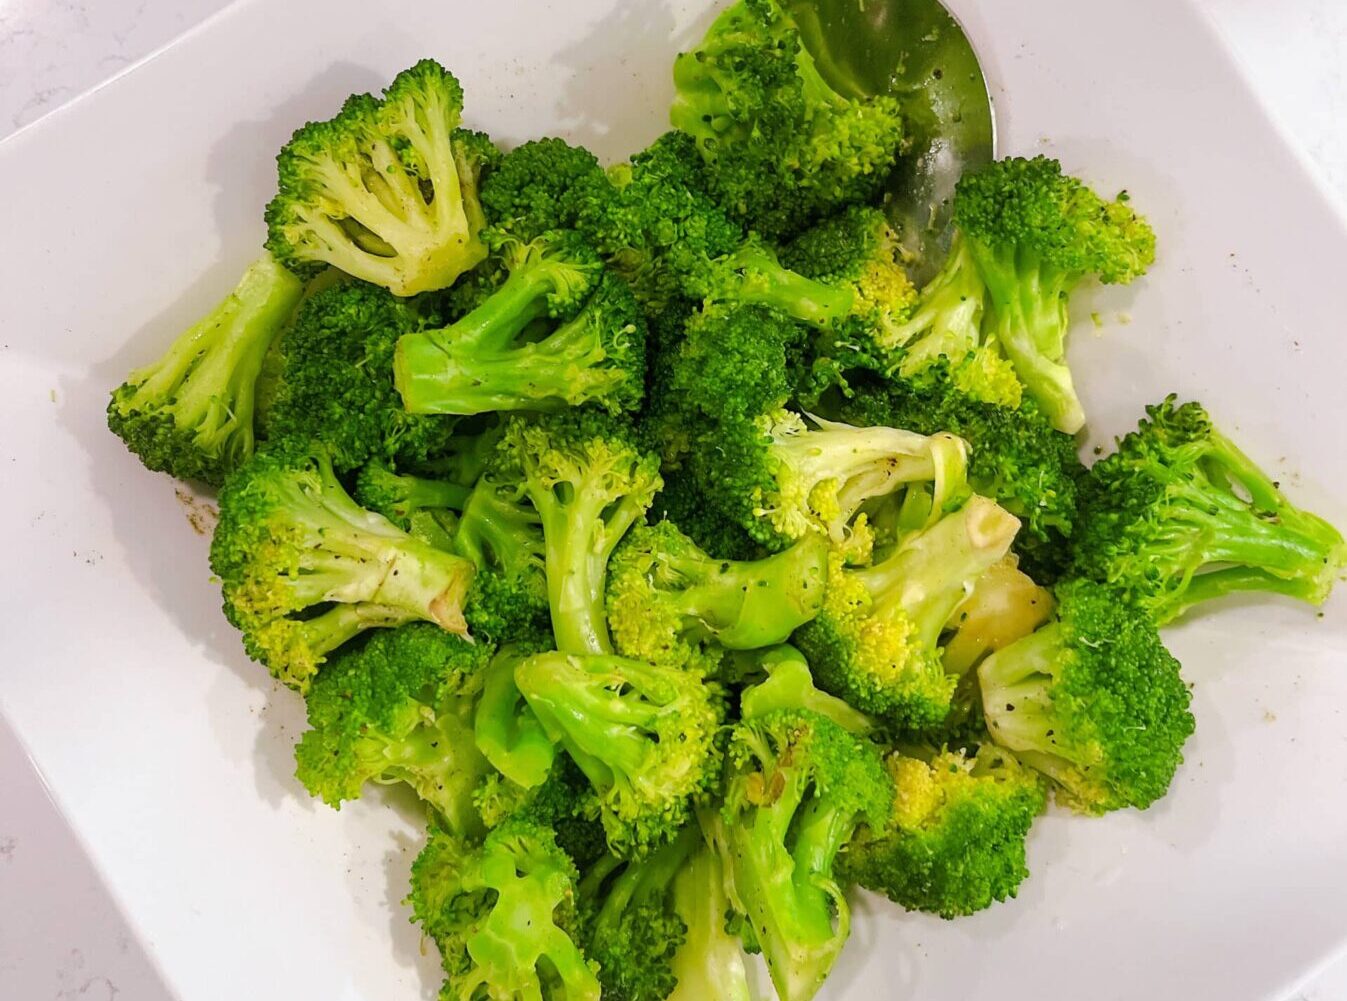 The Best Broccoli Seasoning Ever